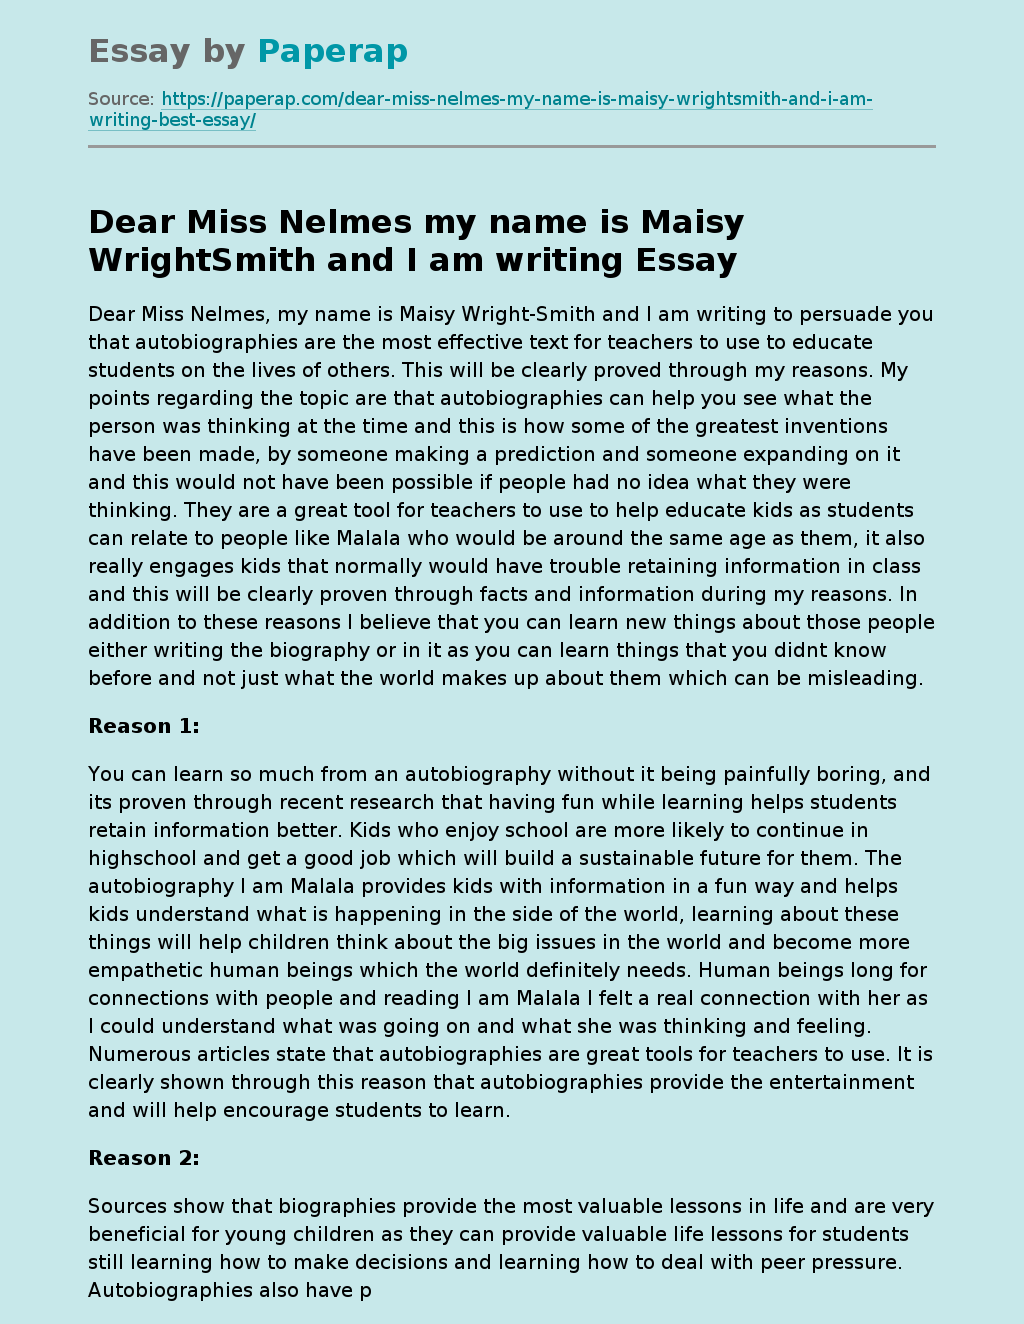 Dear Miss Nelmes my name is Maisy WrightSmith and I am writing